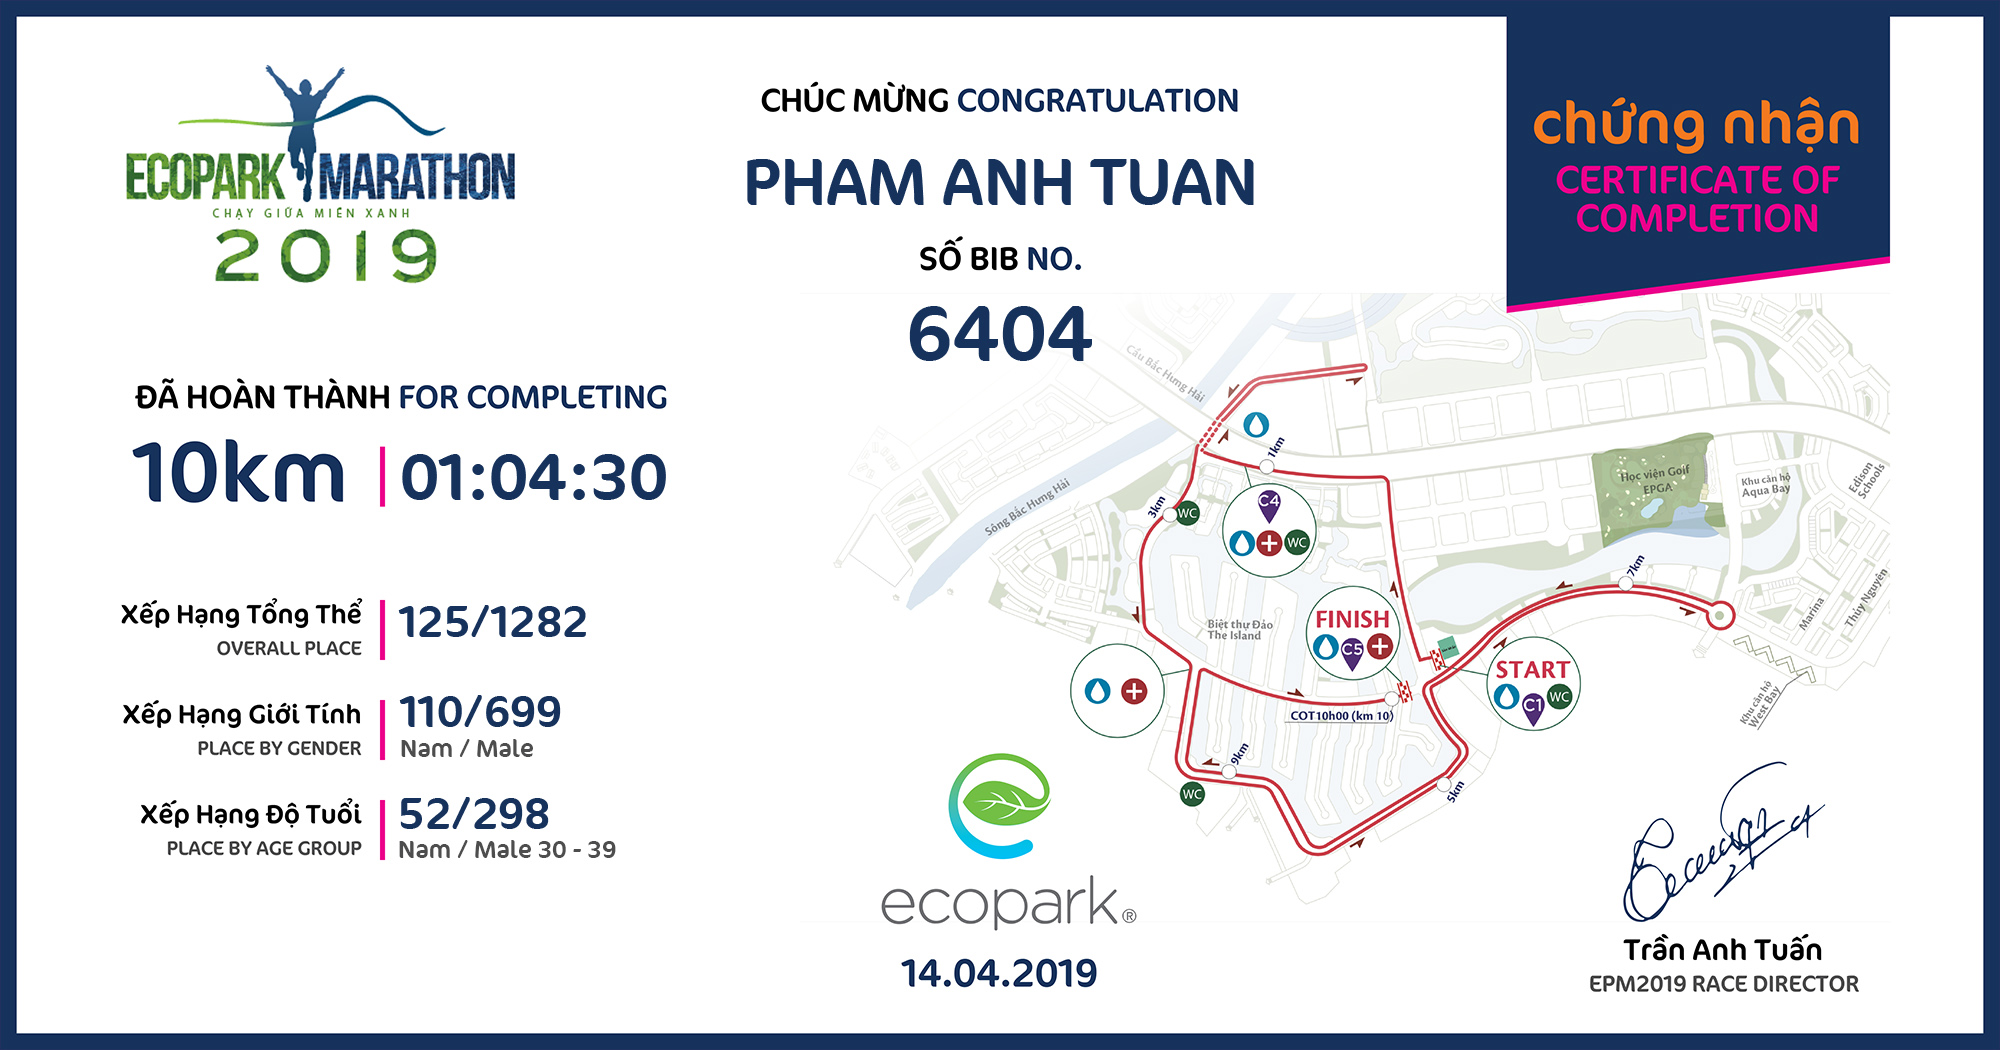 6404 - Pham Anh Tuan